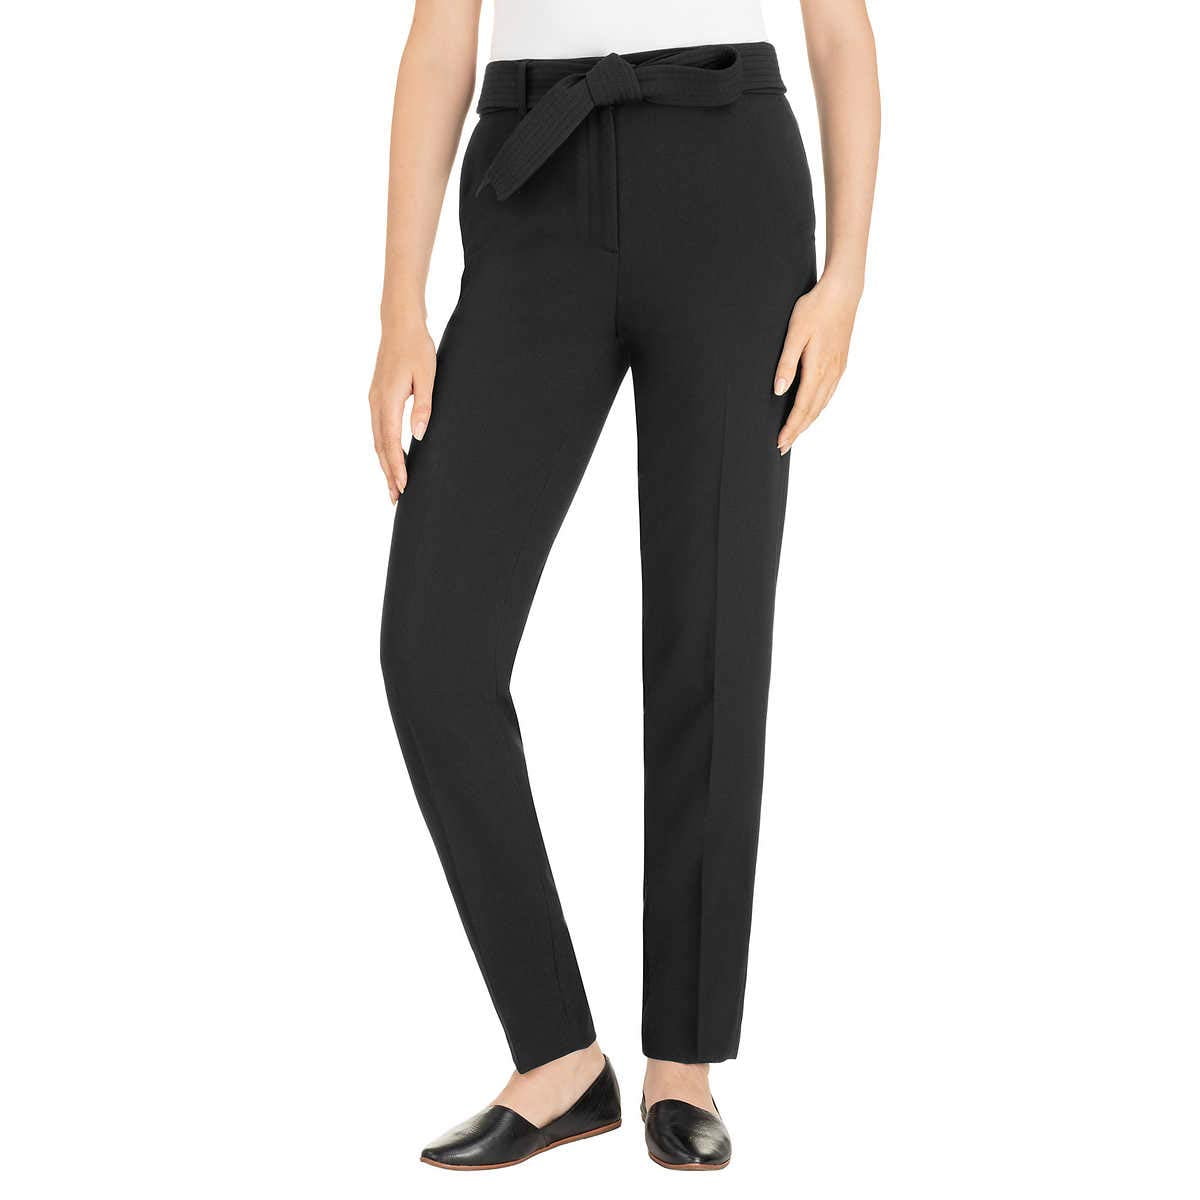 Hilary Radley Ladies' Tie Front Pant (4, Black) - Walmart.com